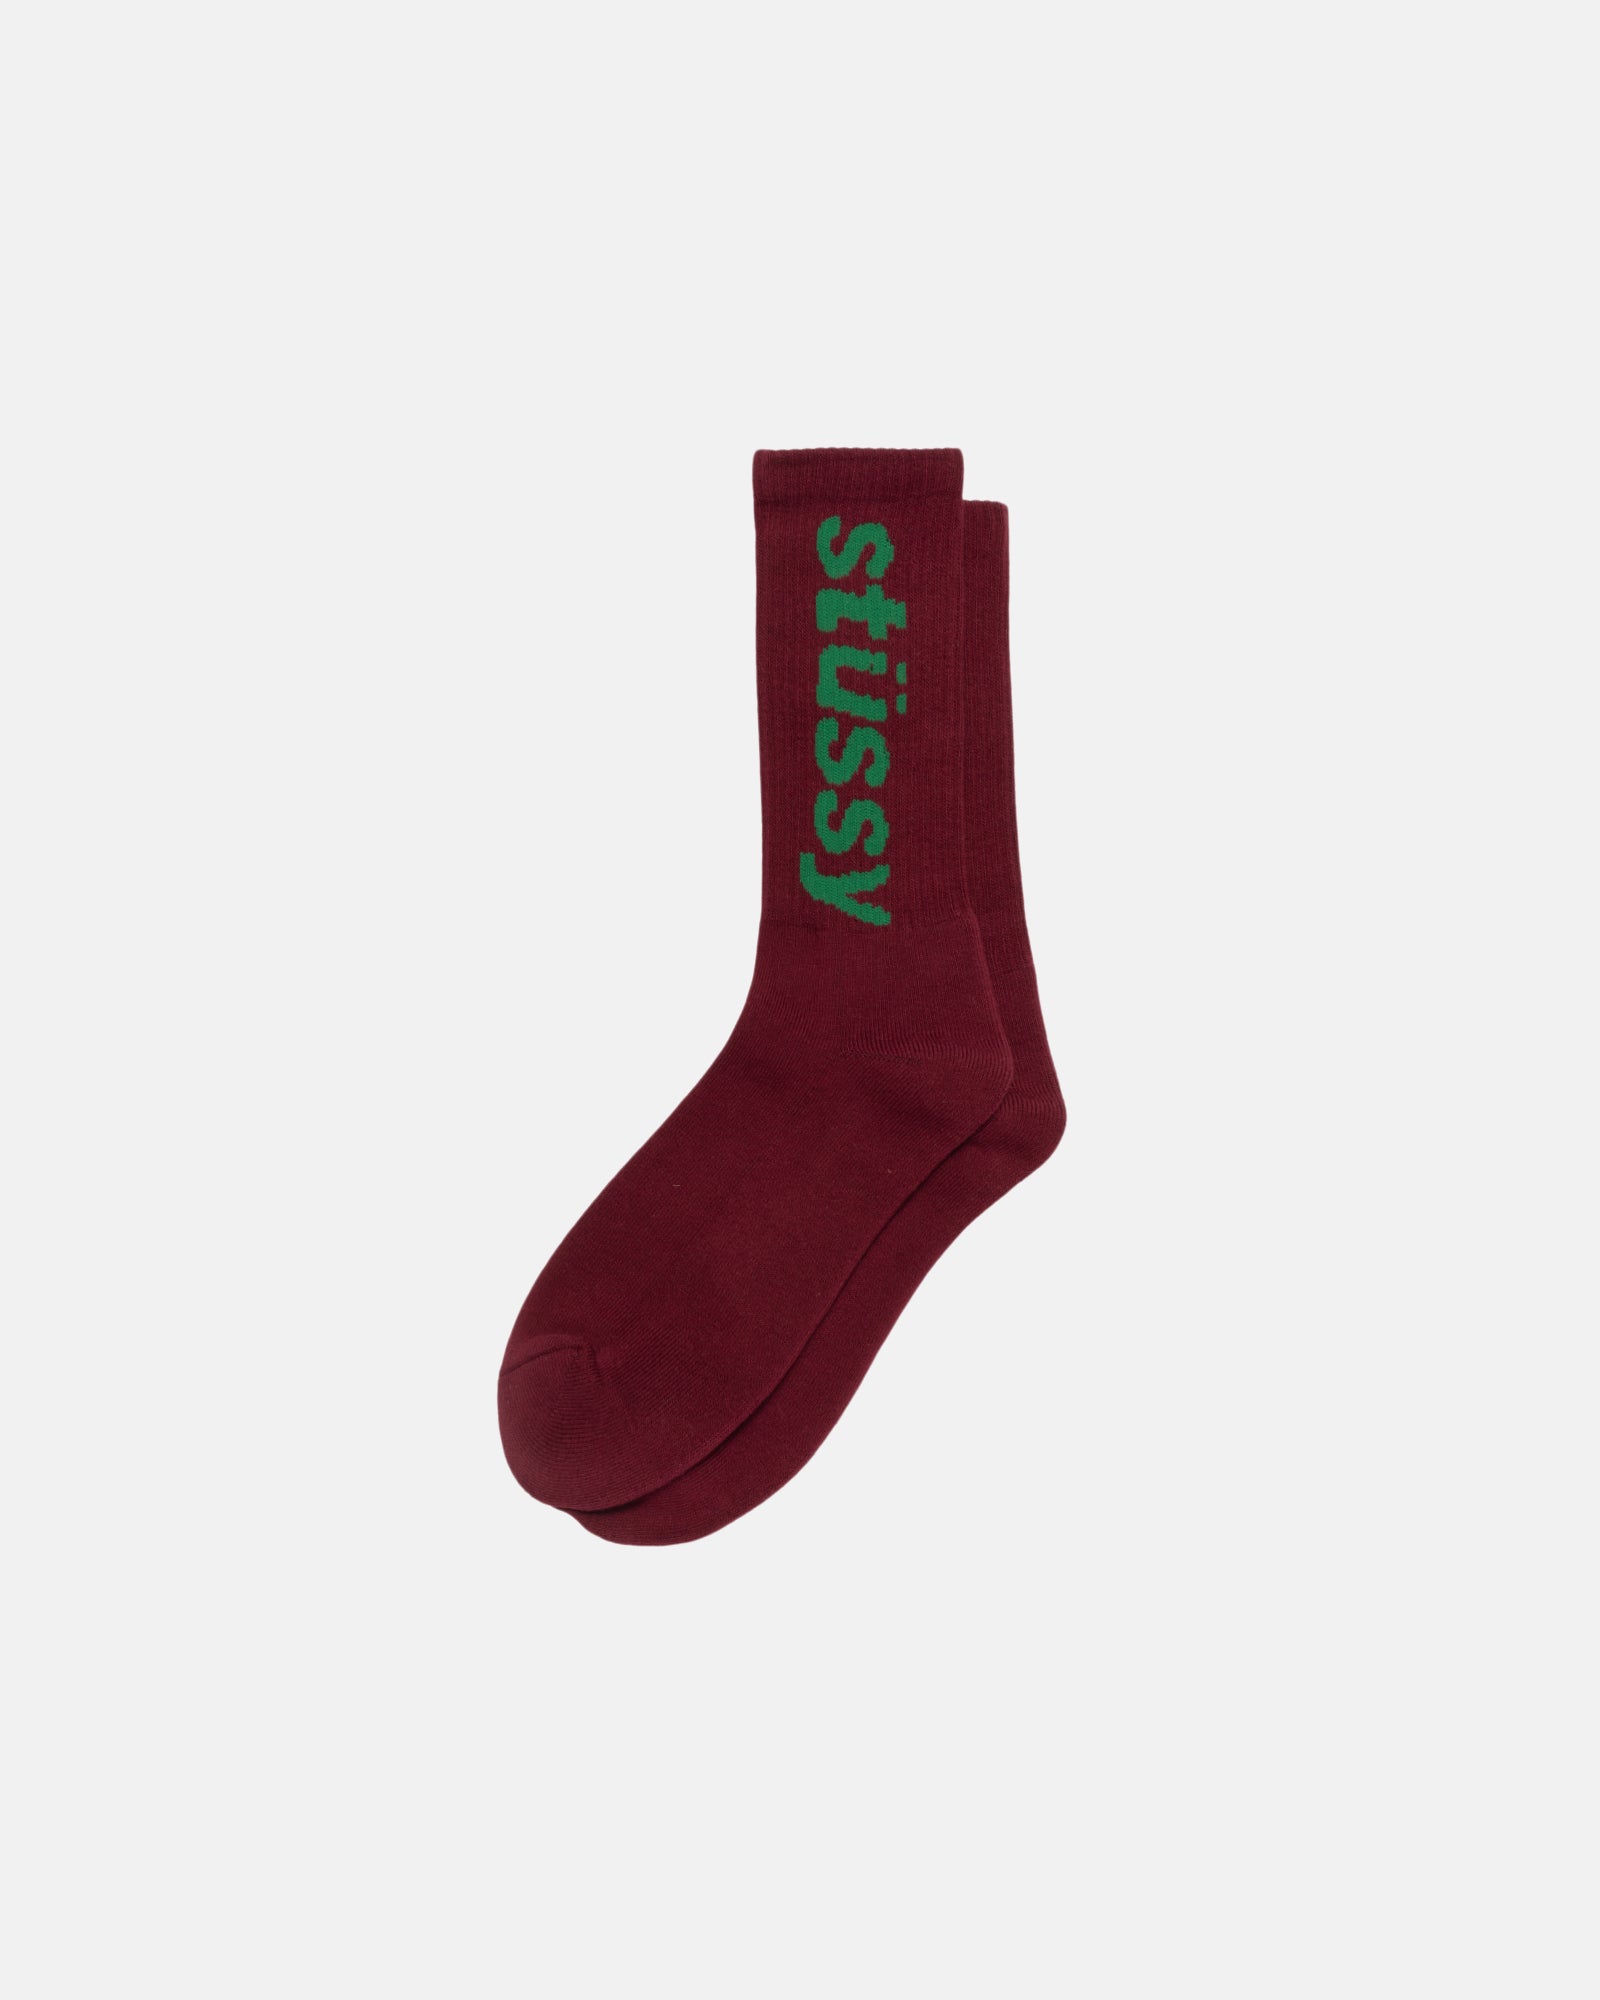 STÜSSY | Helvetica Crew Socks (Wine/Forest)